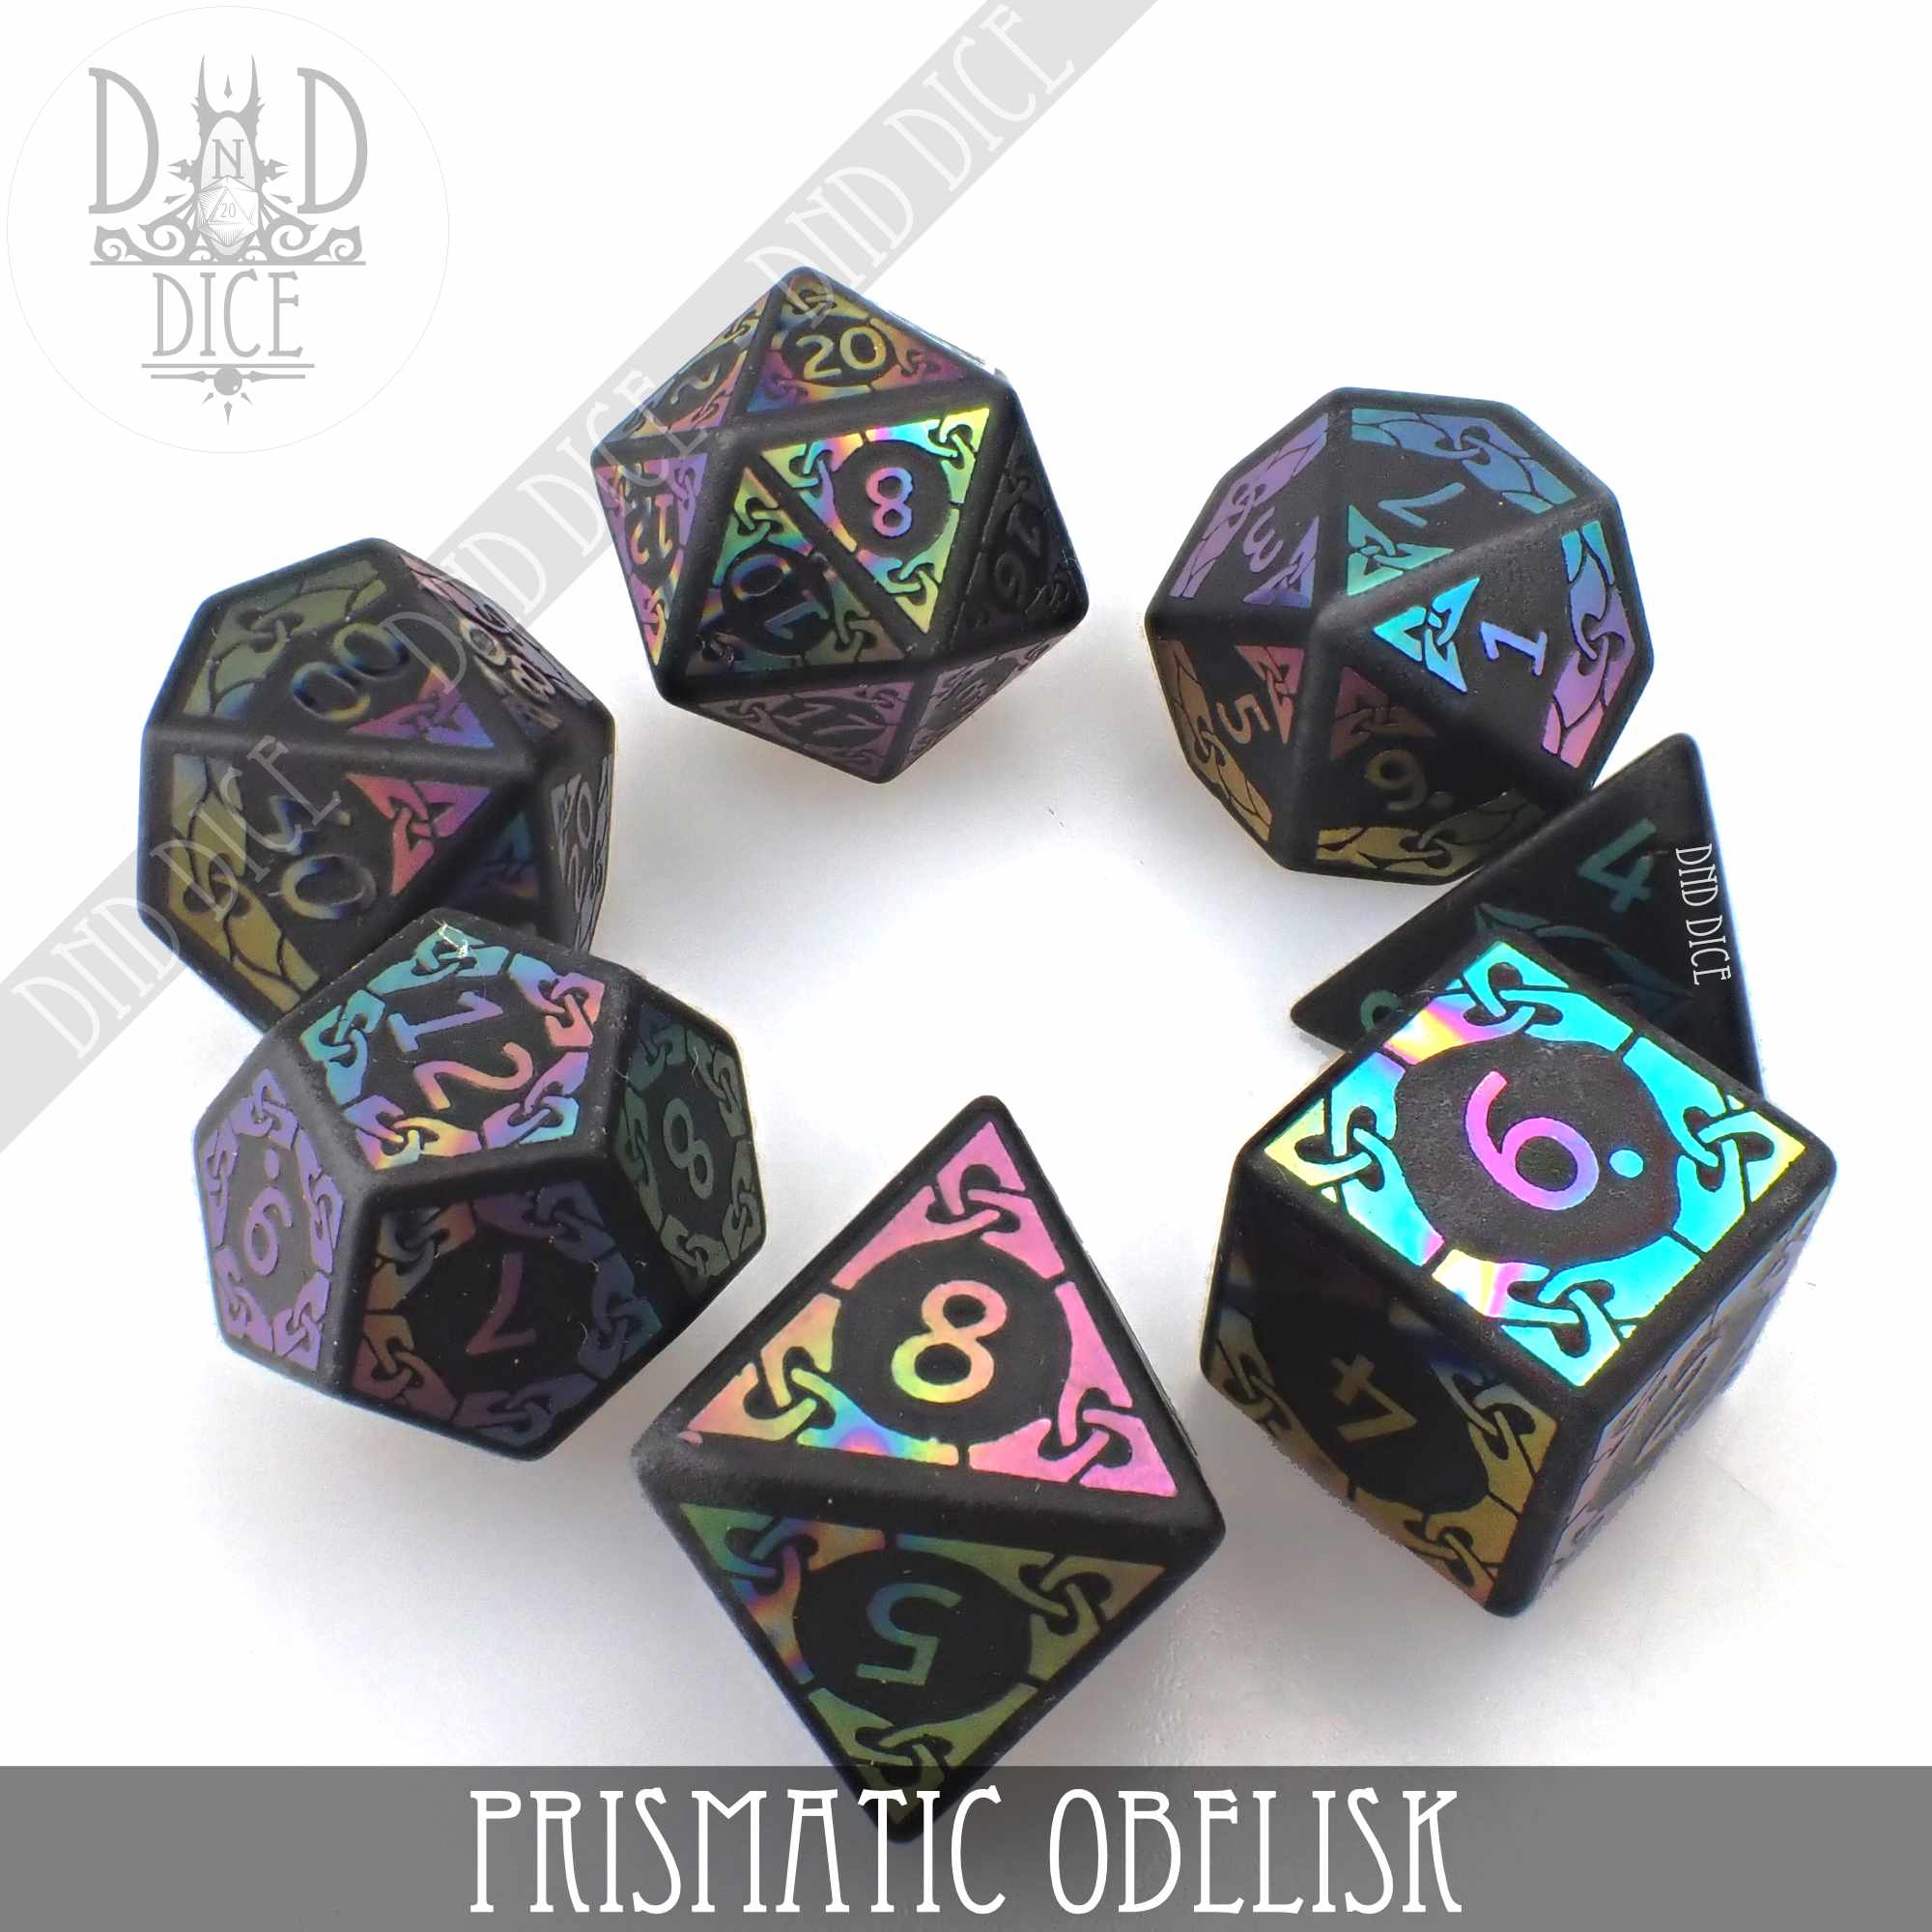 Prismatic Obelisk Obsidian Dice Set (Gift Box)